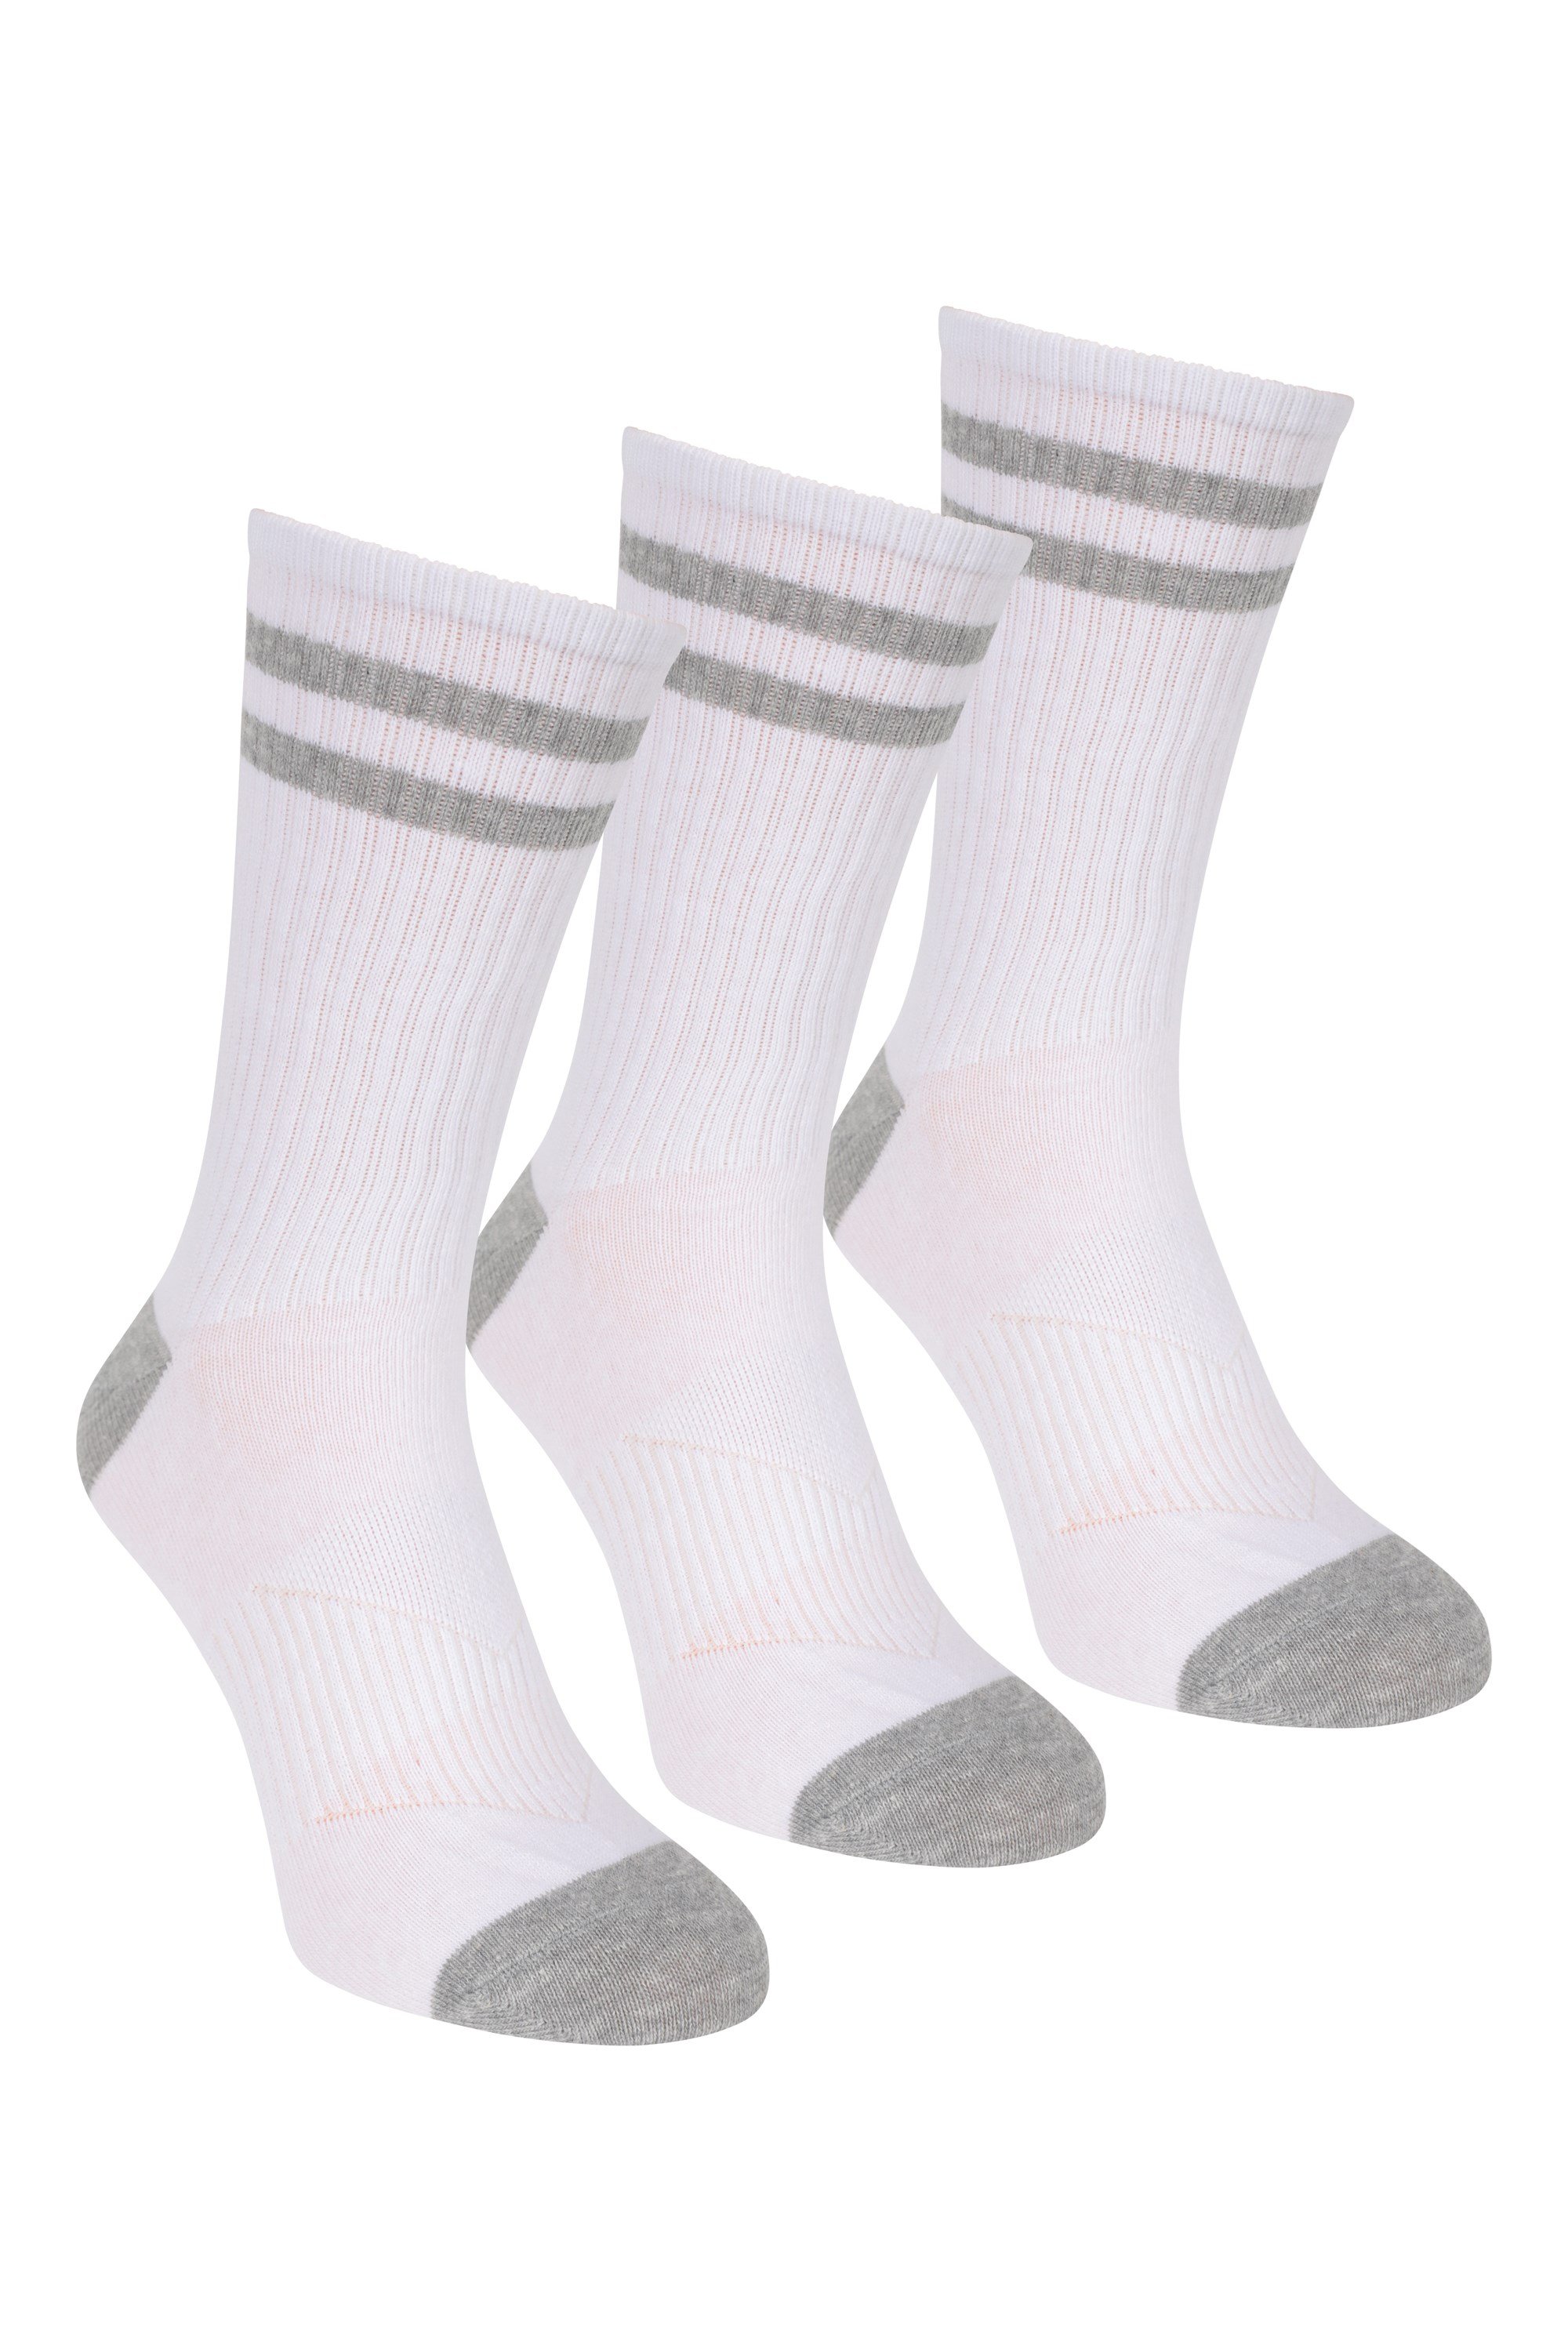 IsoCool Calf Height Socks - White